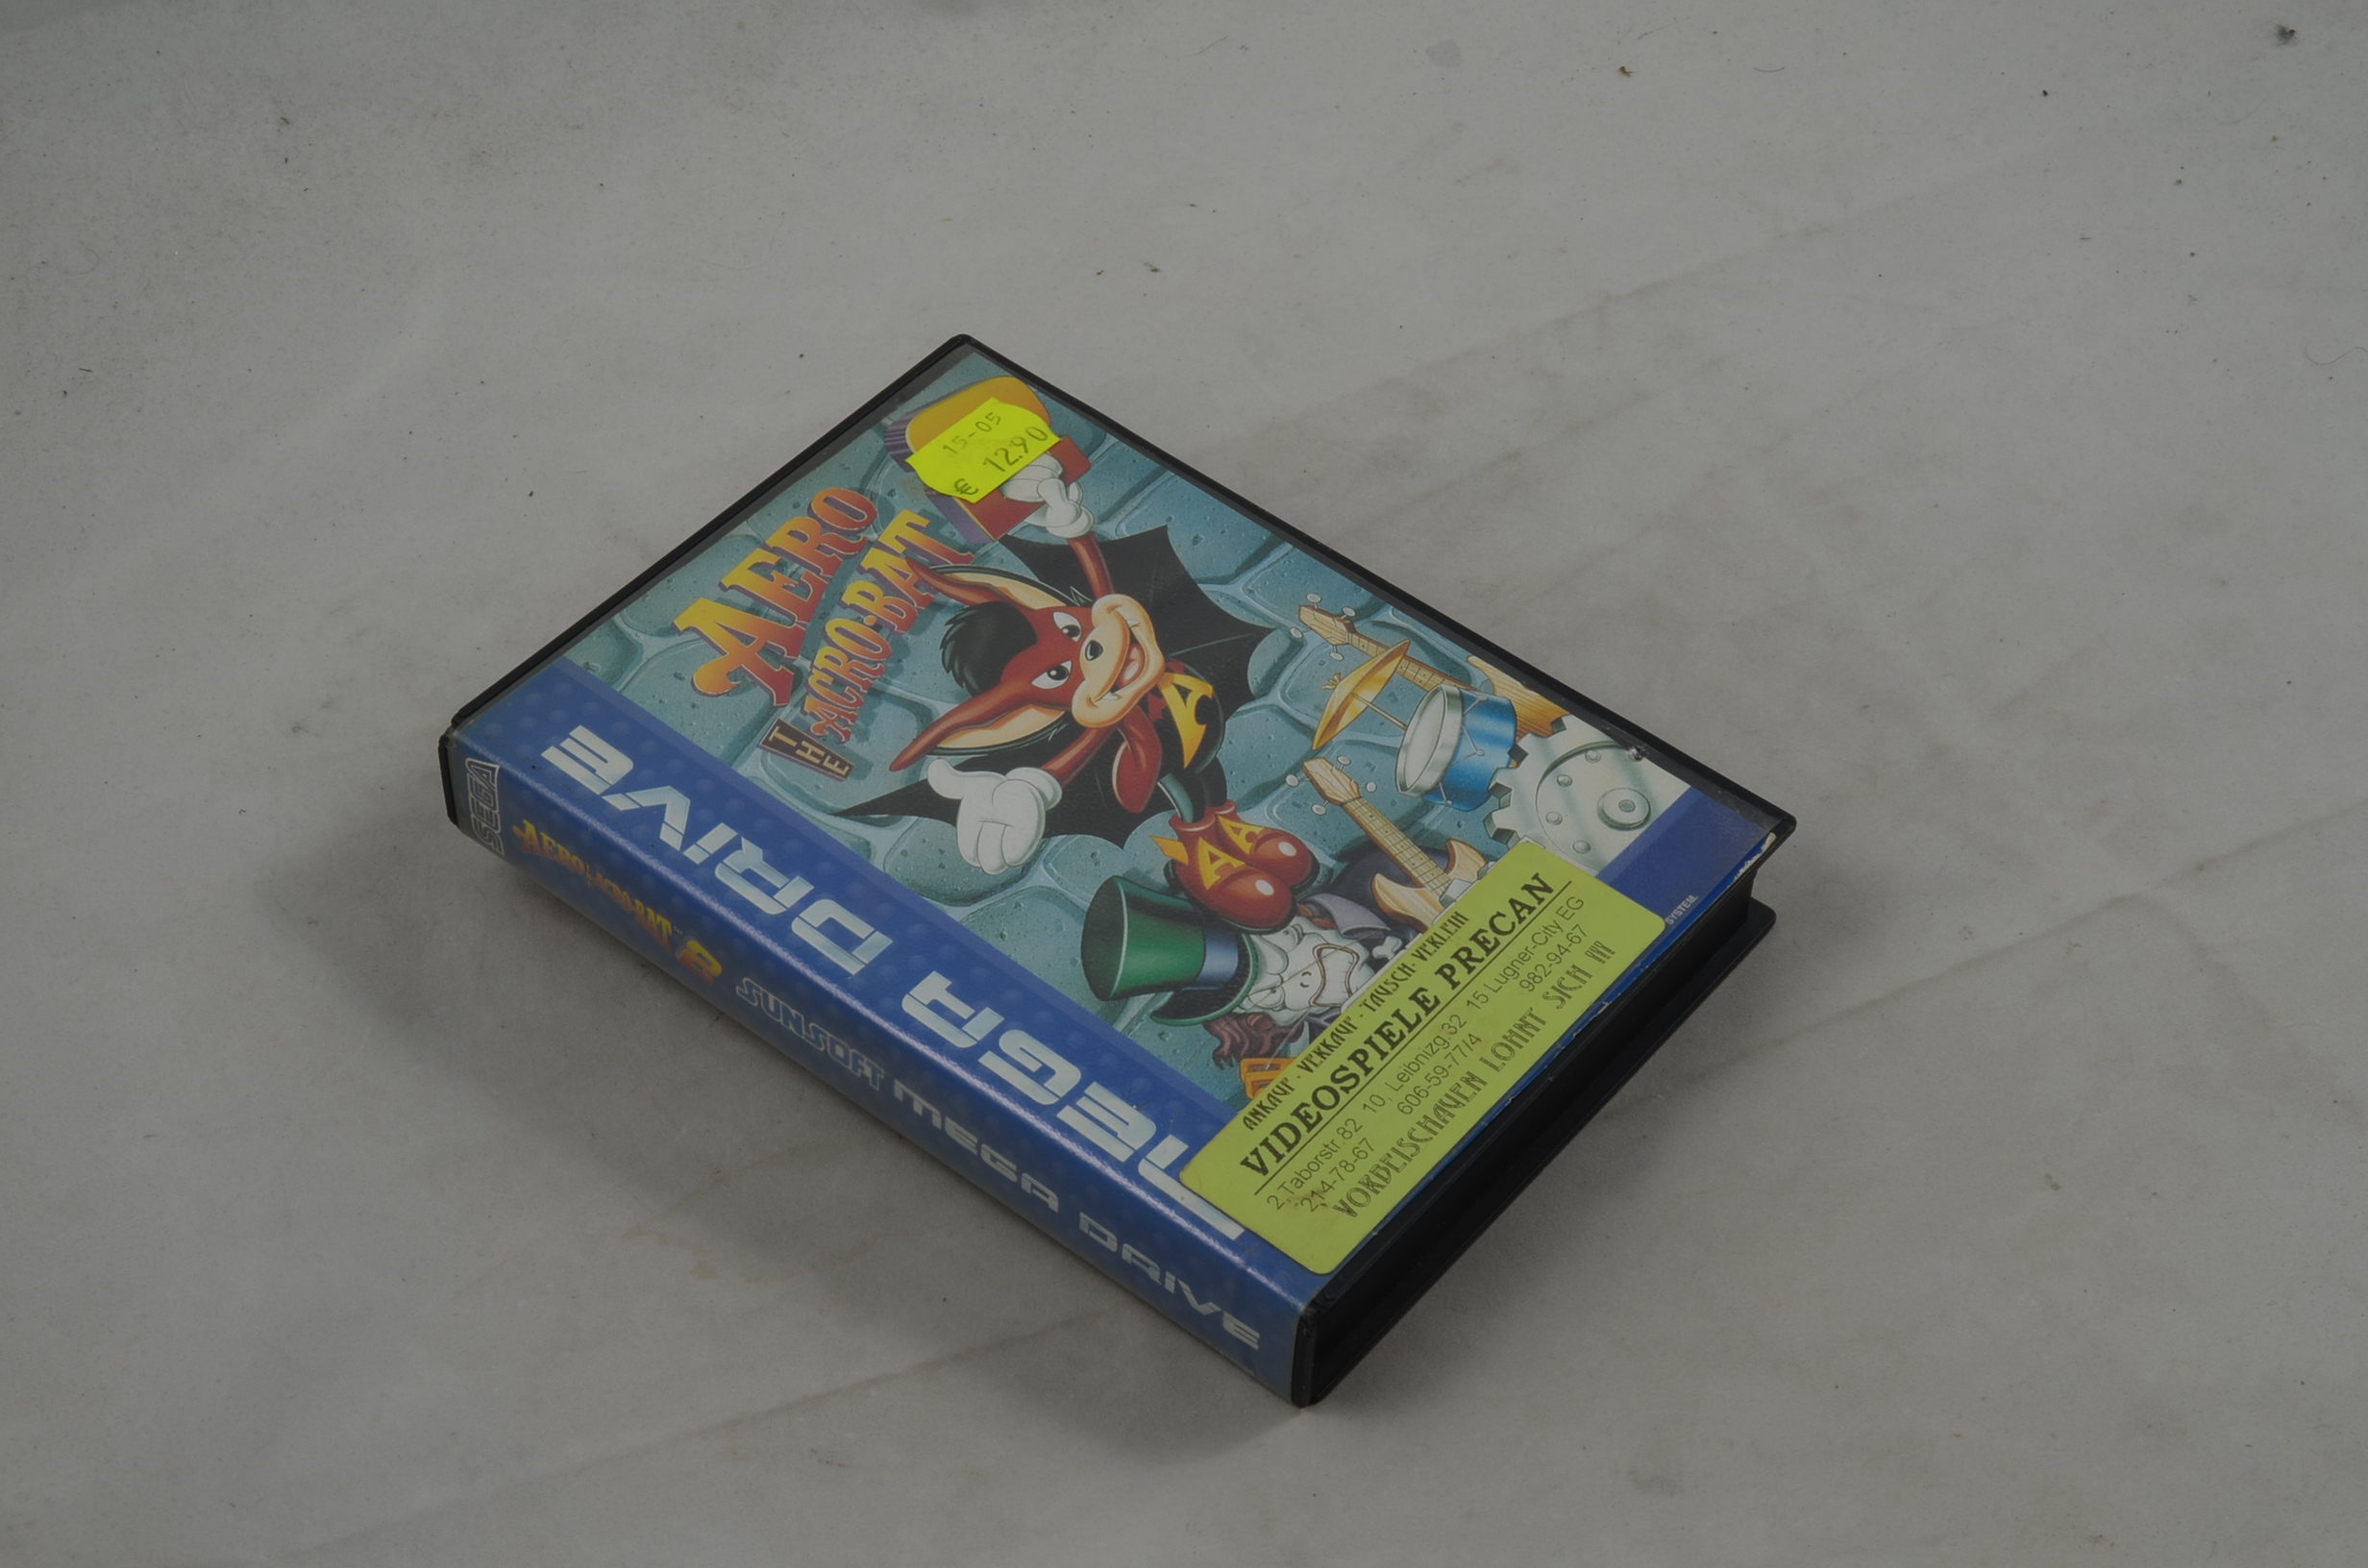 Produktbild von Aero the Acro-Bat 2 Sega Mega Drive Spiel CB